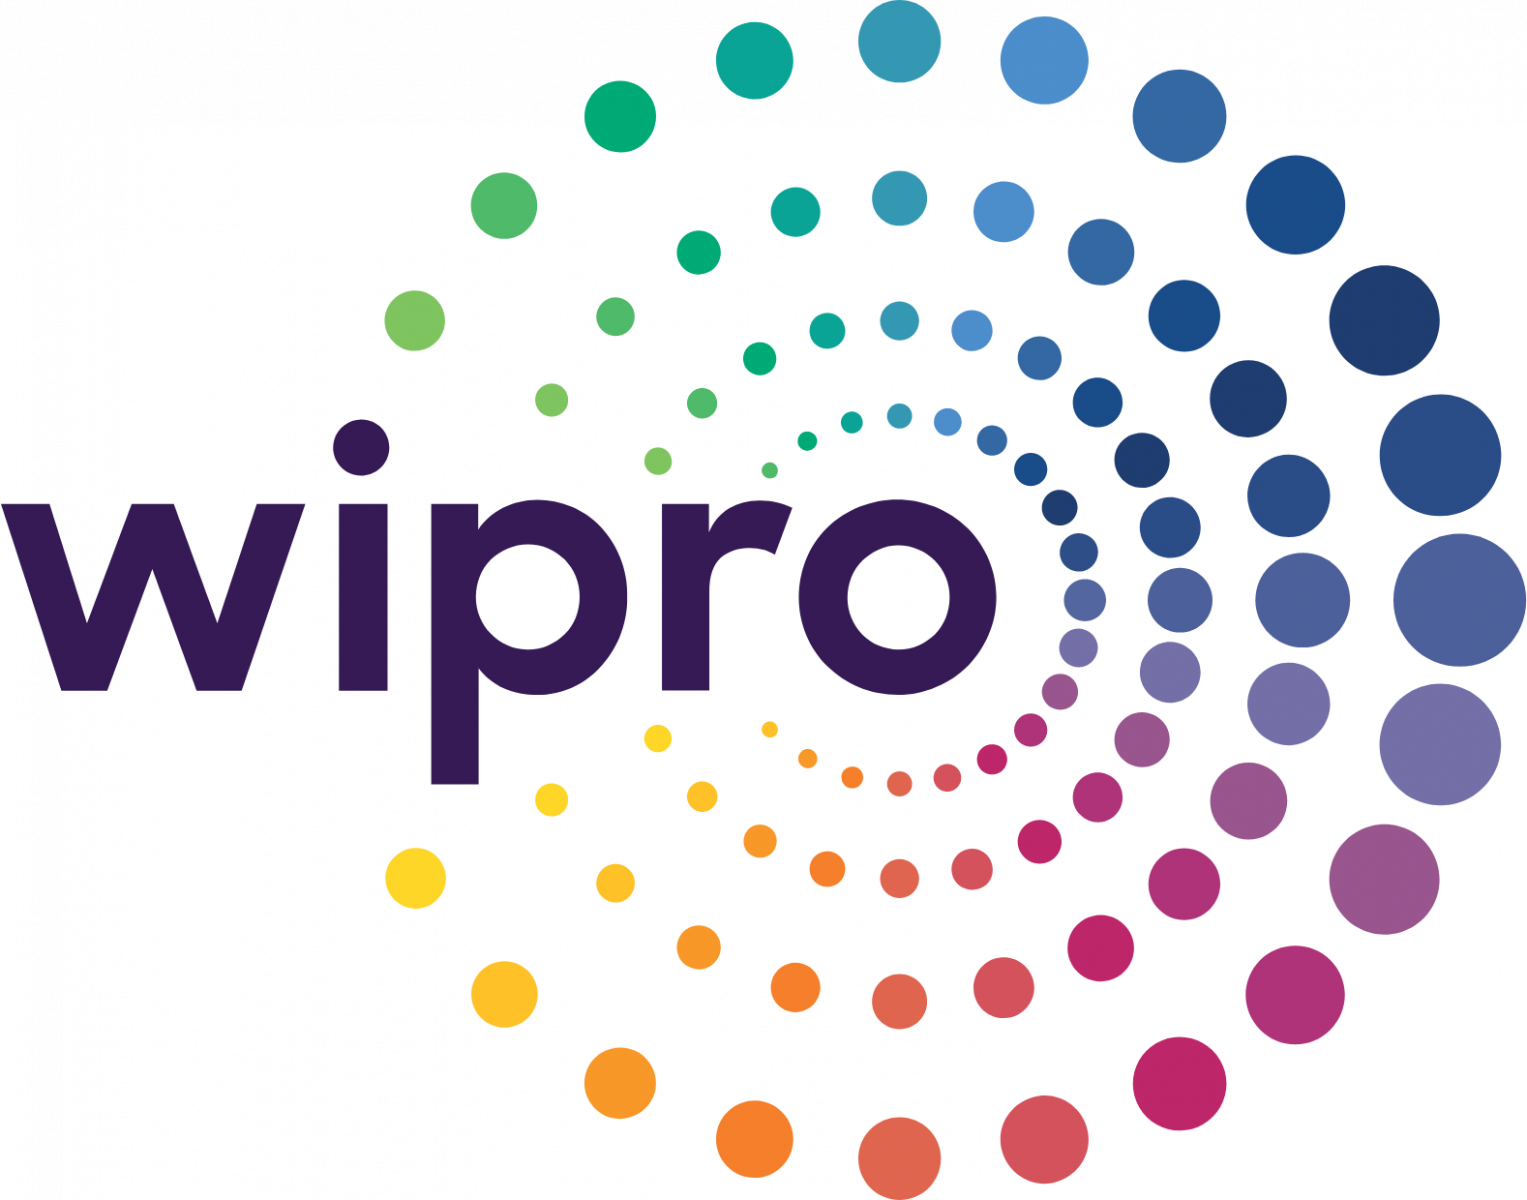 Wipro it companies in Ghaziabad